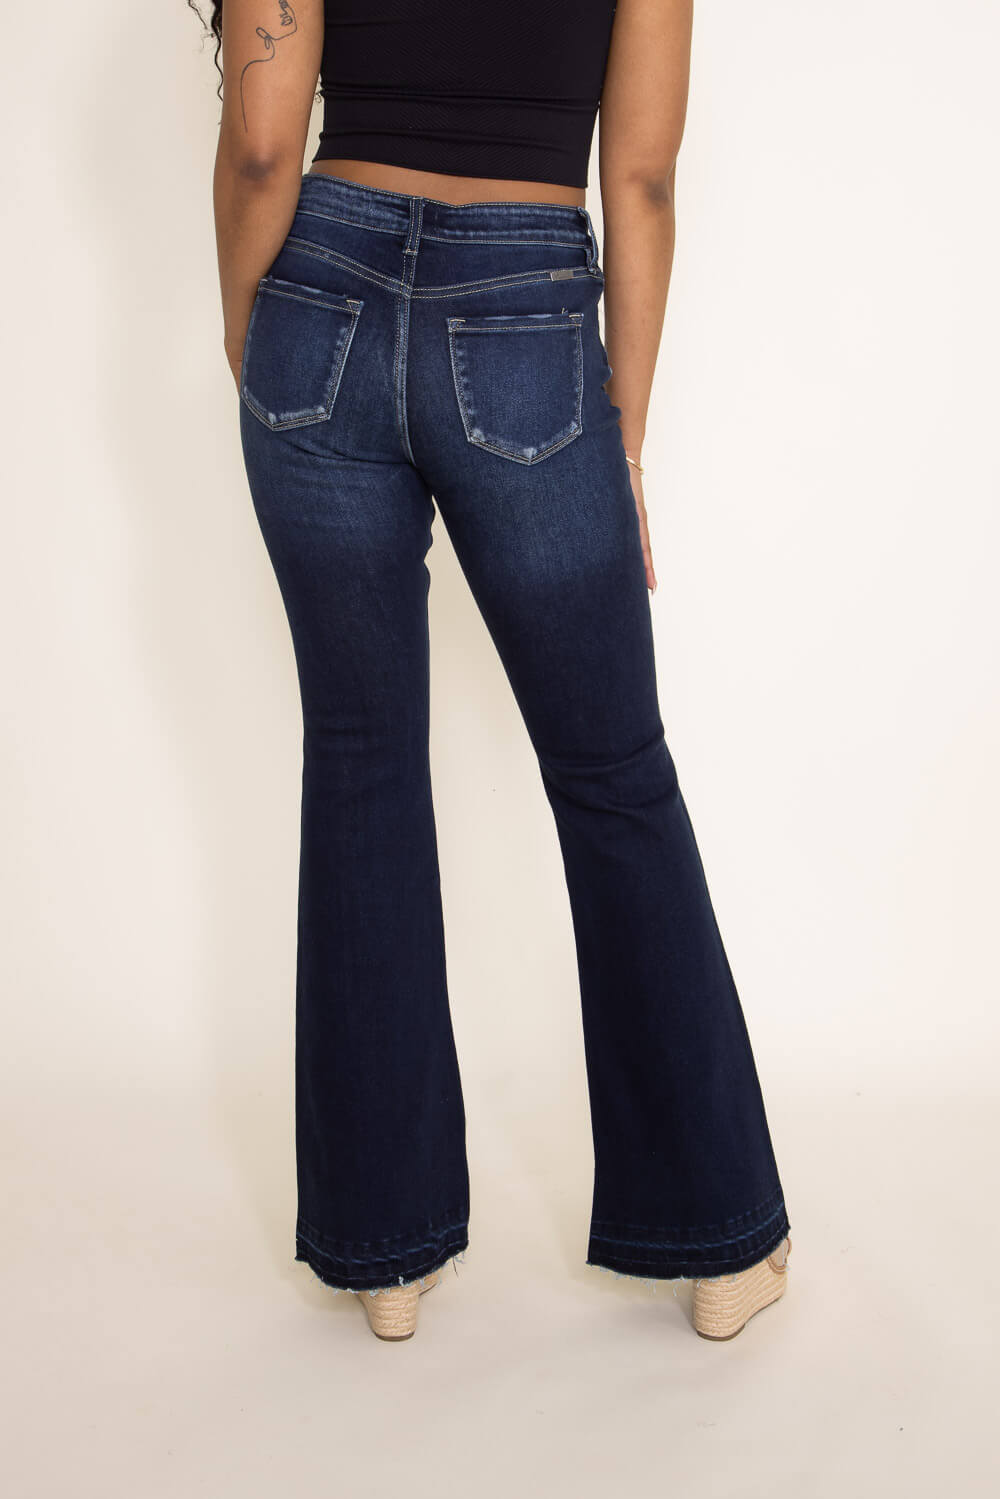 KanCan Mid-Rise Button Flare Jeans for Women | KC7338LD – Glik's